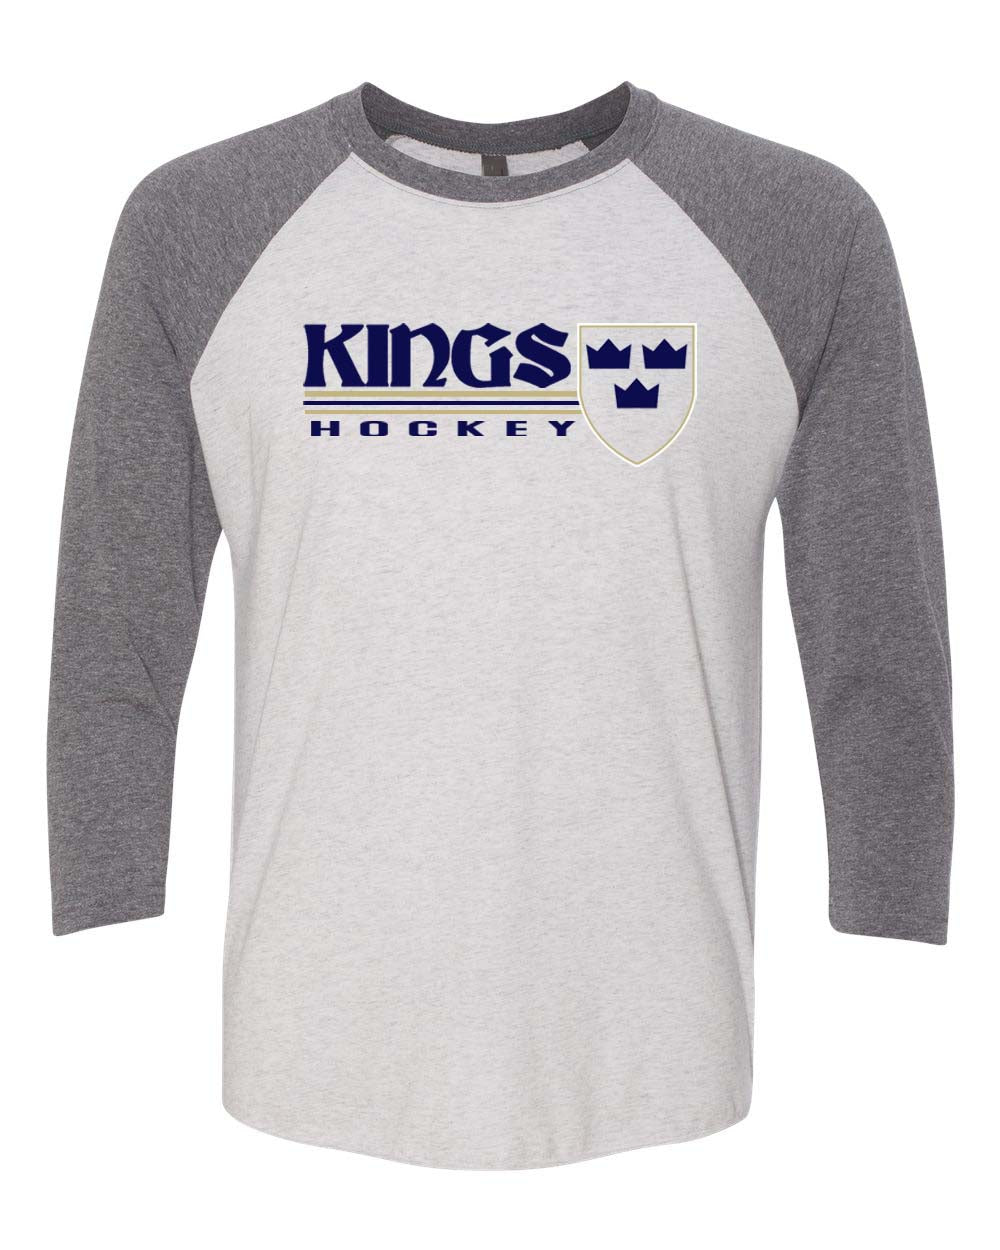 Kings Hockey Design 3 raglan shirt